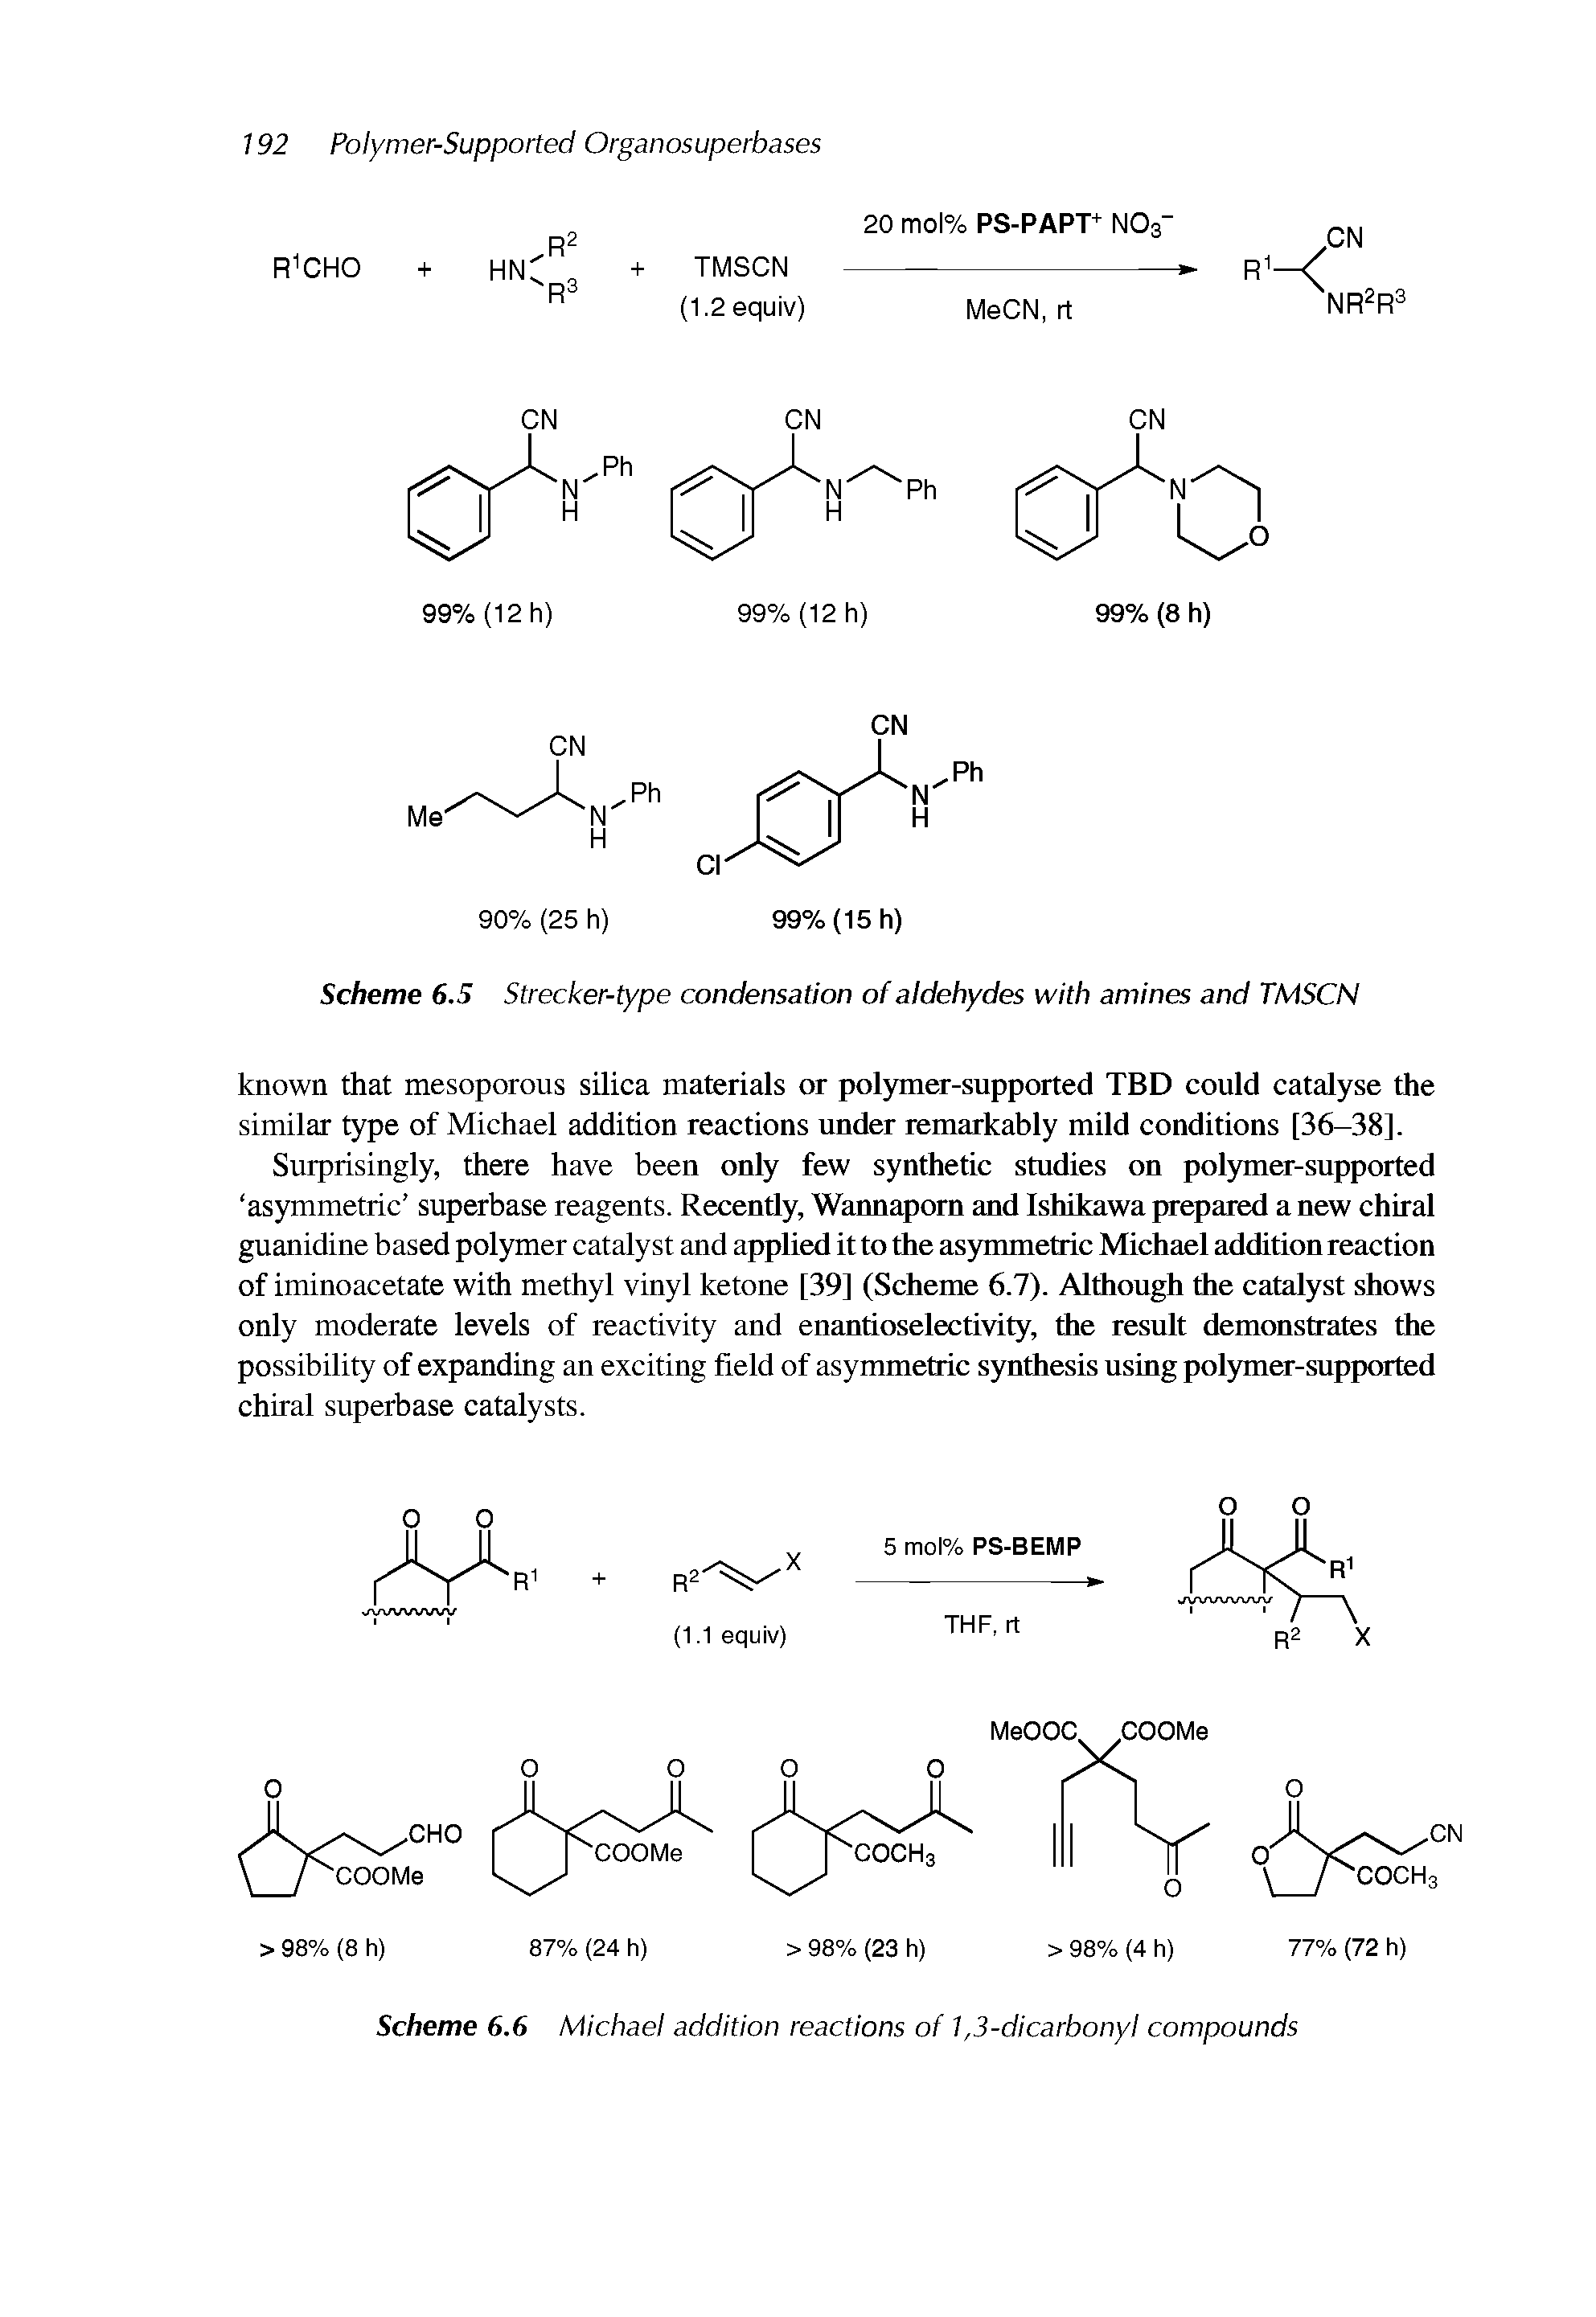 Scheme 6.5 Strecker-type condensation of aldehydes with amines and TMSCN...